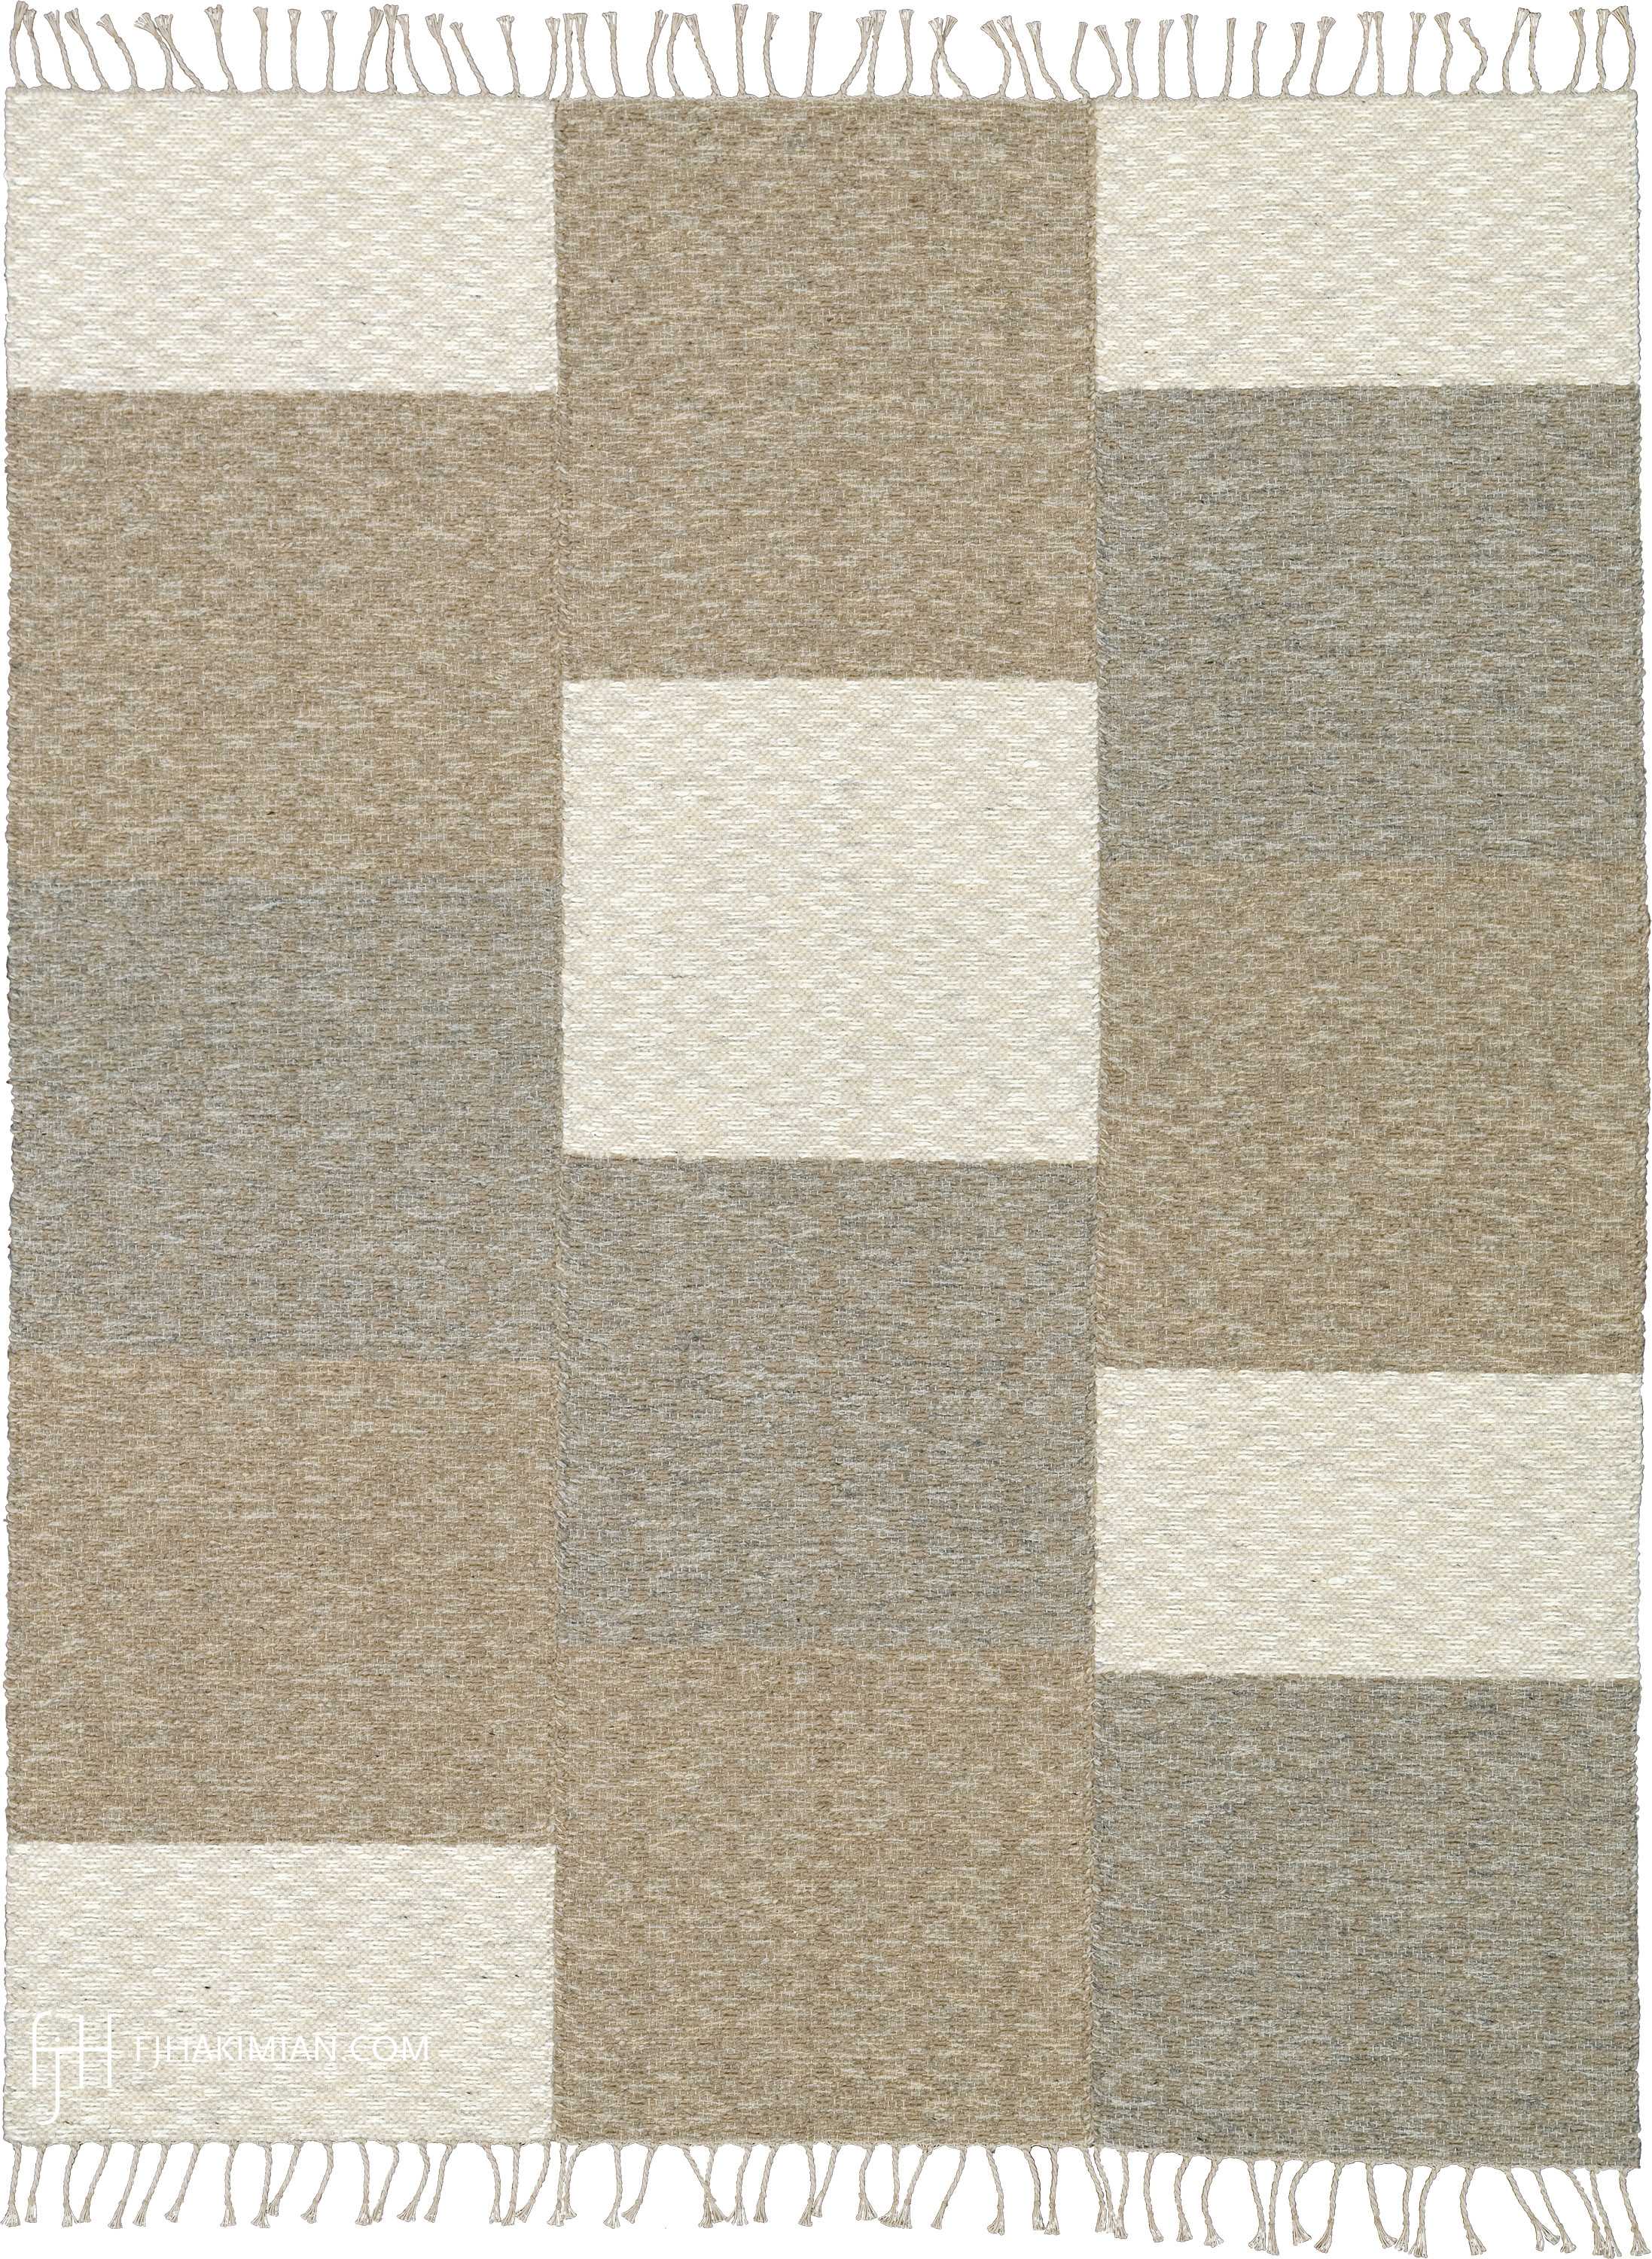 #26090 | Shadow Texture Design | Custom Swedish Inspired Rug | FJ Hakimian | Carpet Gallery in NY